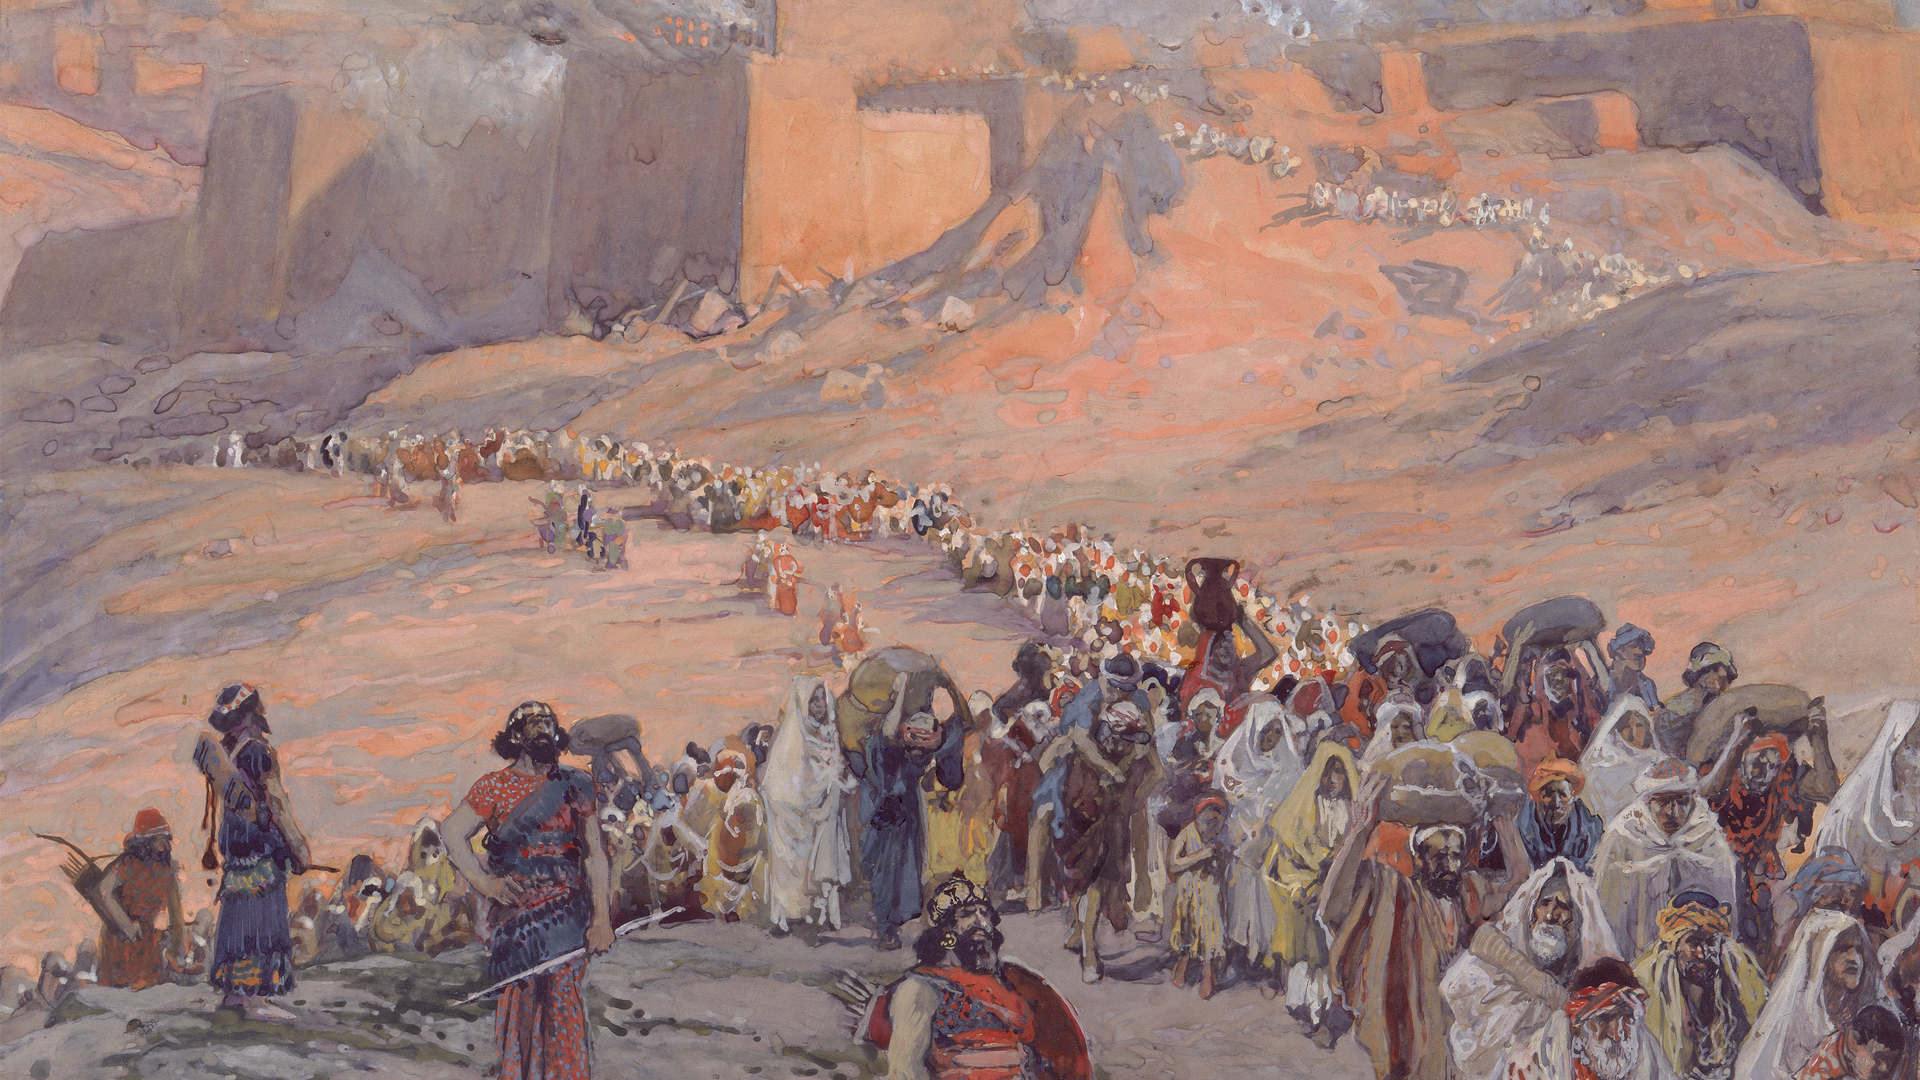 Painting by James Tissot showing Jewish captives fleeing Jerusalem